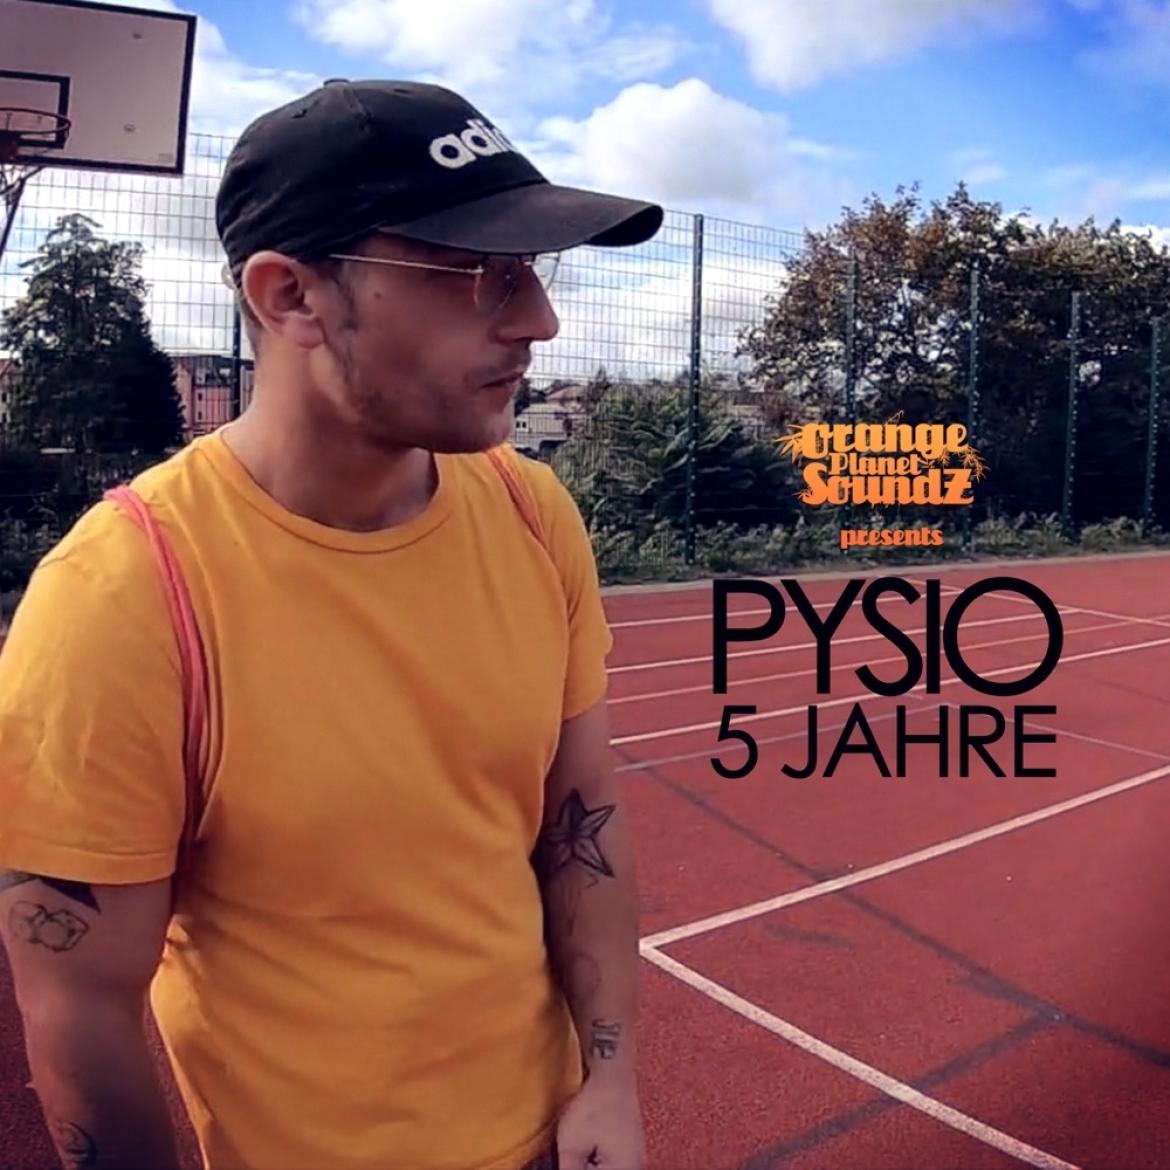 Orange Planet Soundz presents: Pysio - 5 Jahre